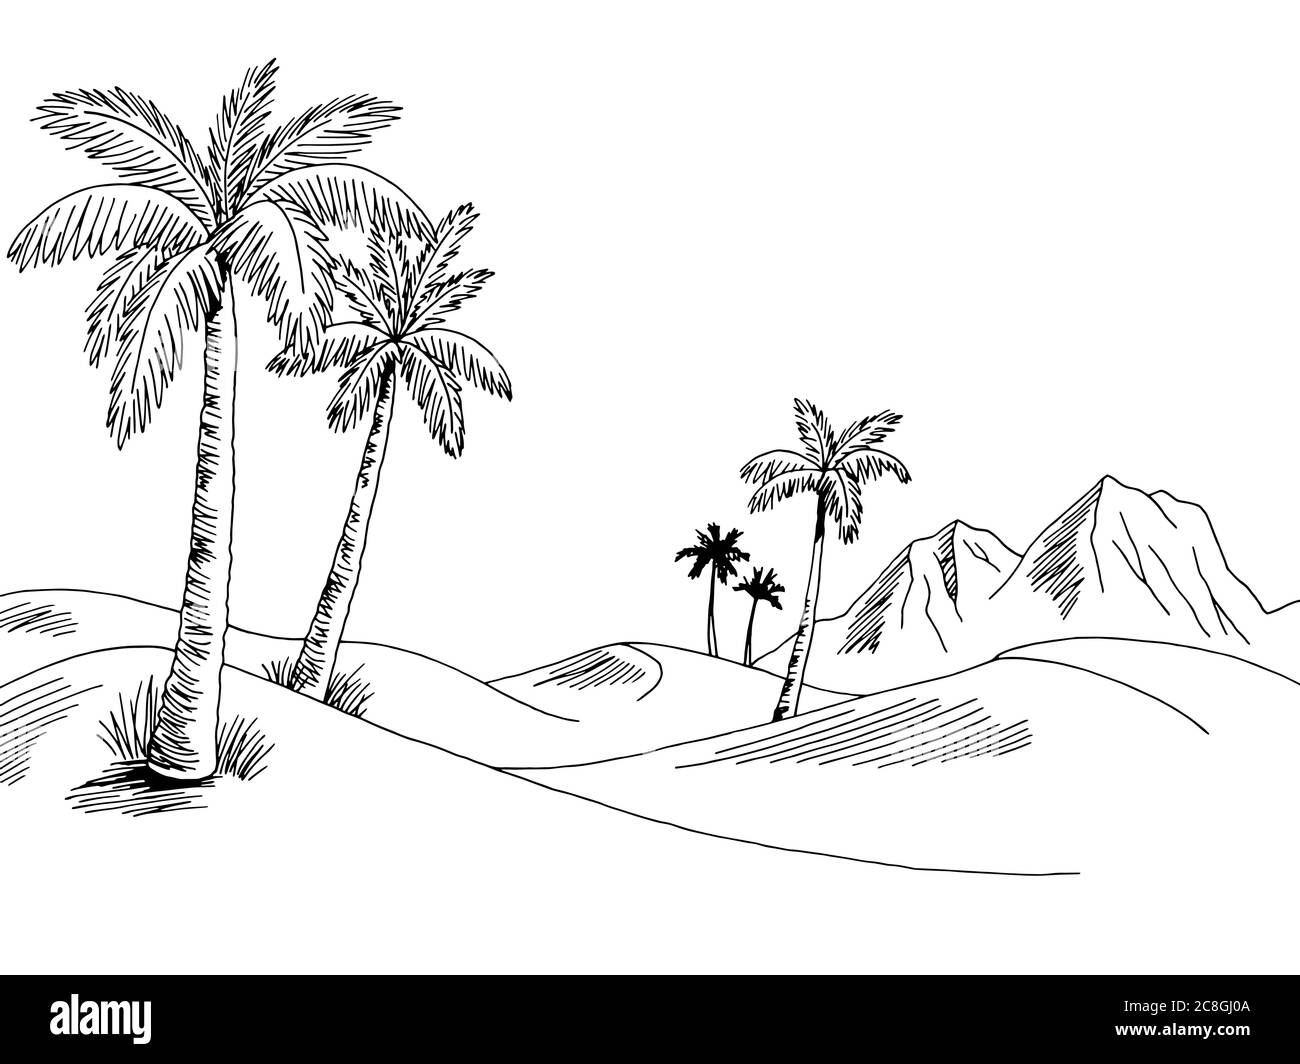 Wüste Grafik schwarz weiß Landschaft Skizze Illustration Vektor Stock Vektor